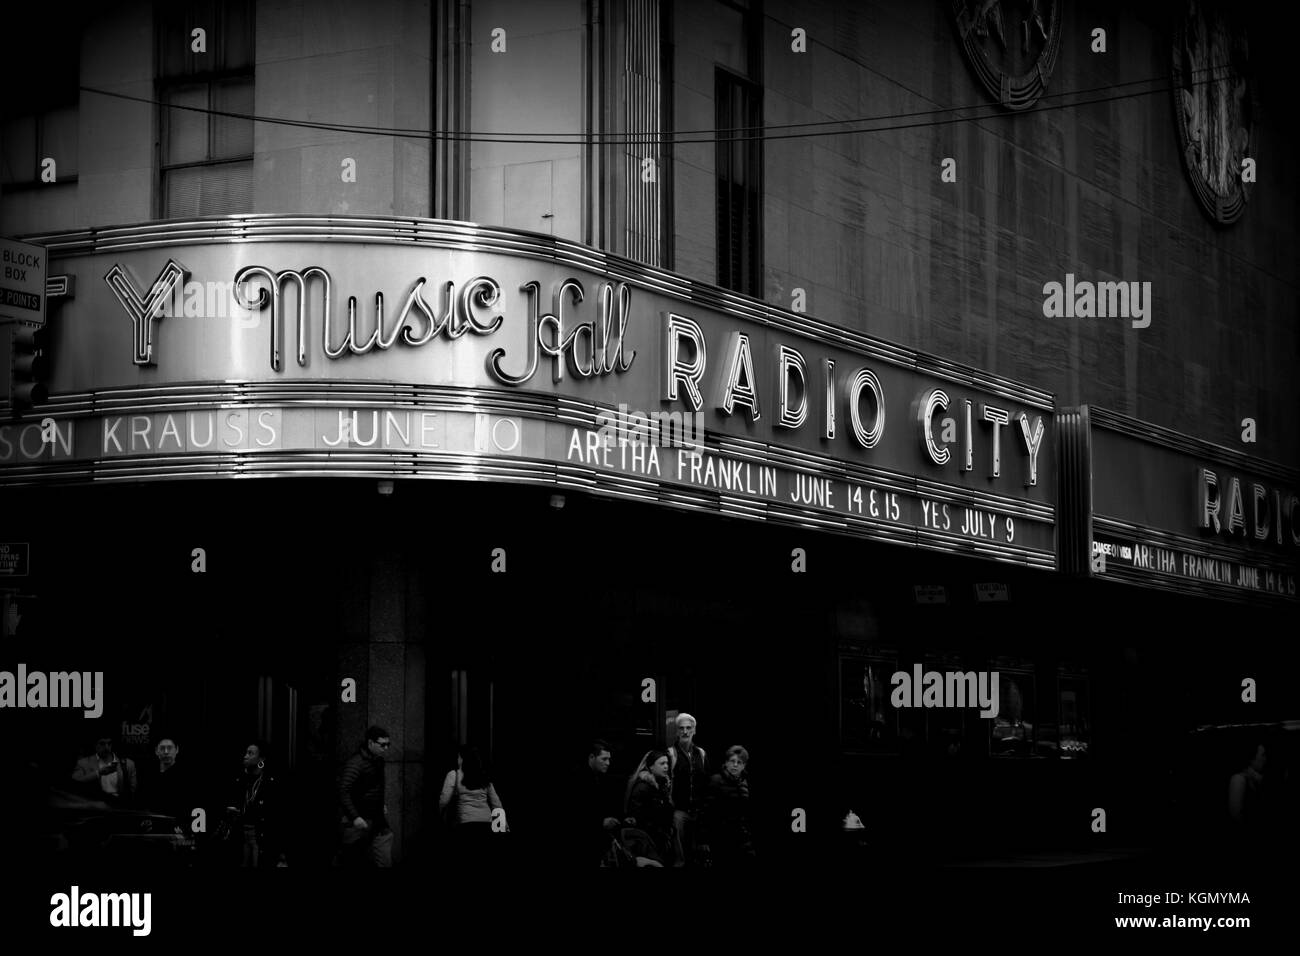 Radio City Music Hall New York Black and White Stock Photos & Images - Alamy